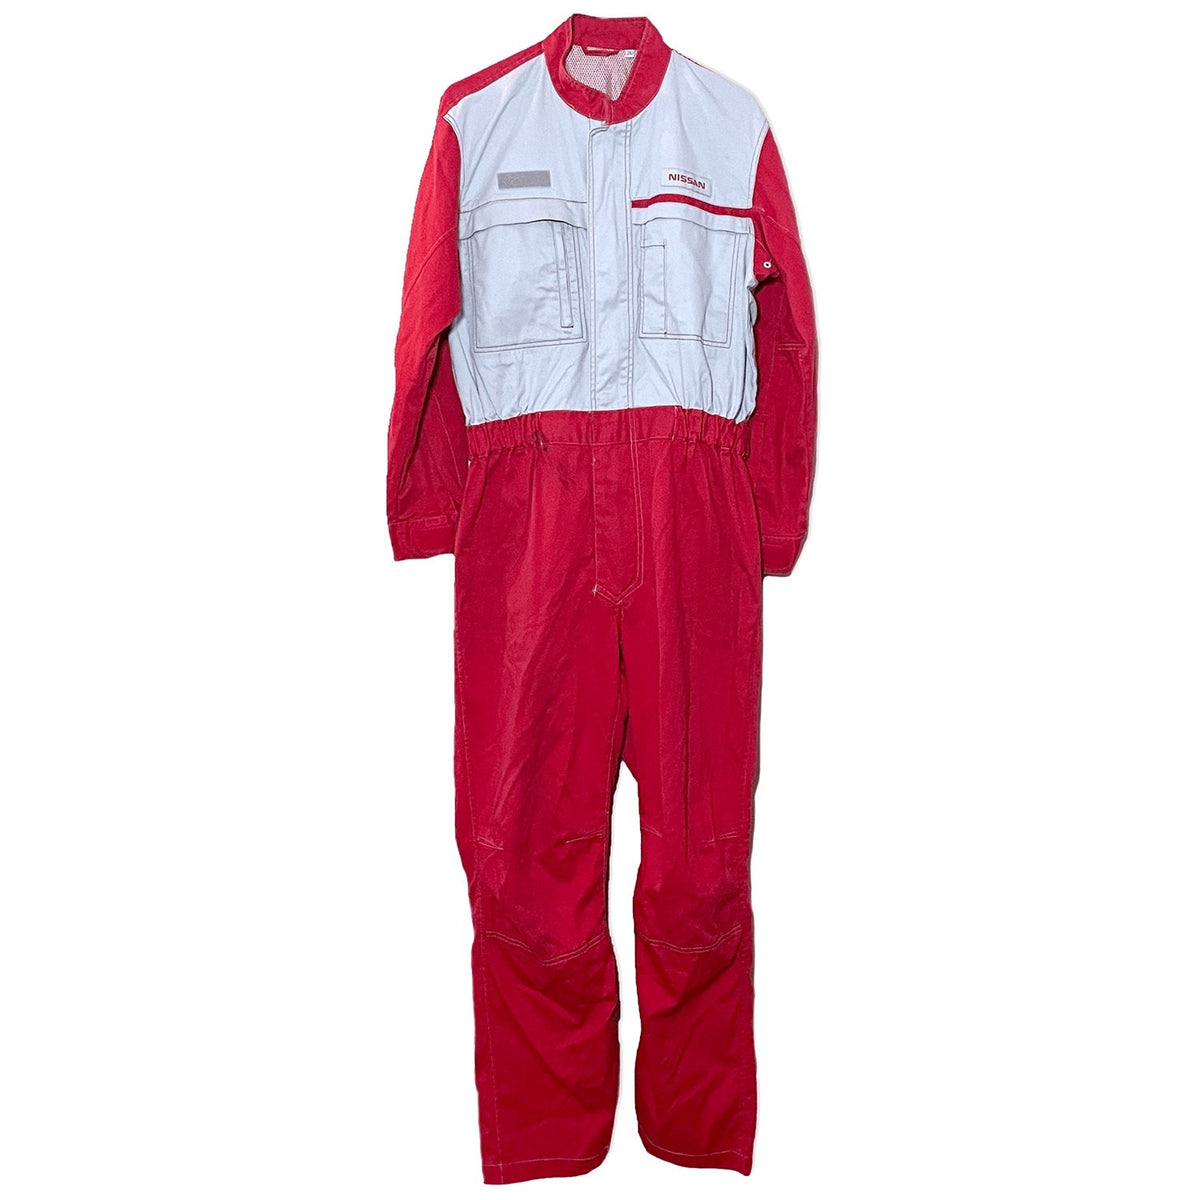 Retro Japan JDM Nissan Tsunagi Mechanics Jumpsuit Coverall Uniform Red 2L